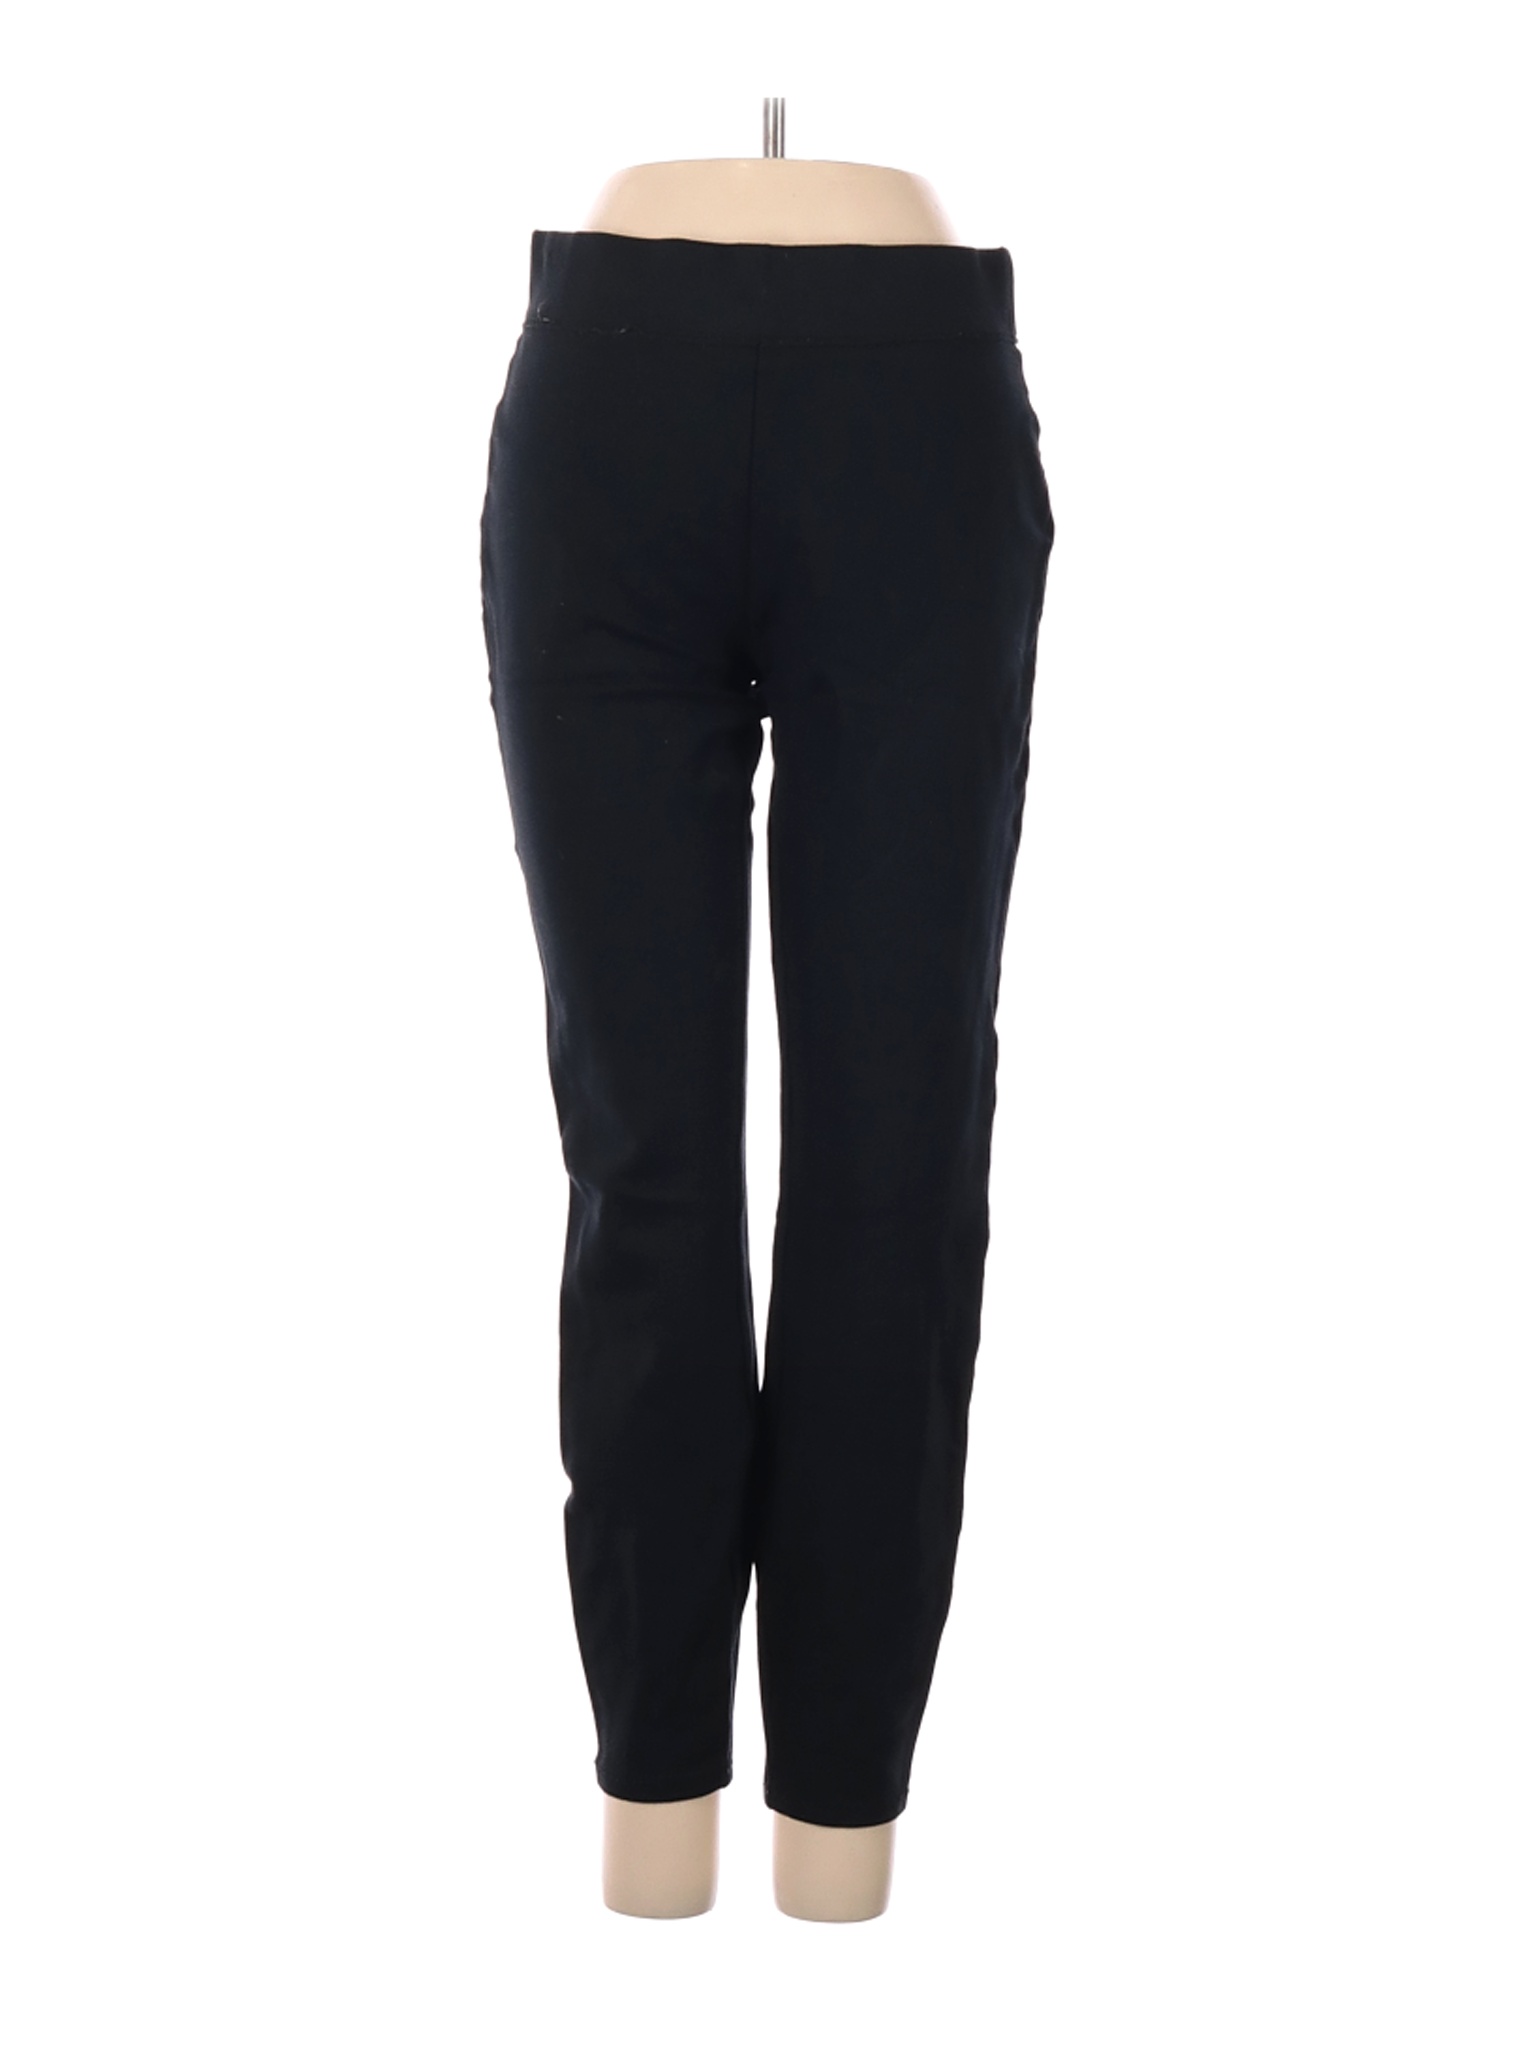 Abercrombie & Fitch Women Black Casual Pants S | eBay